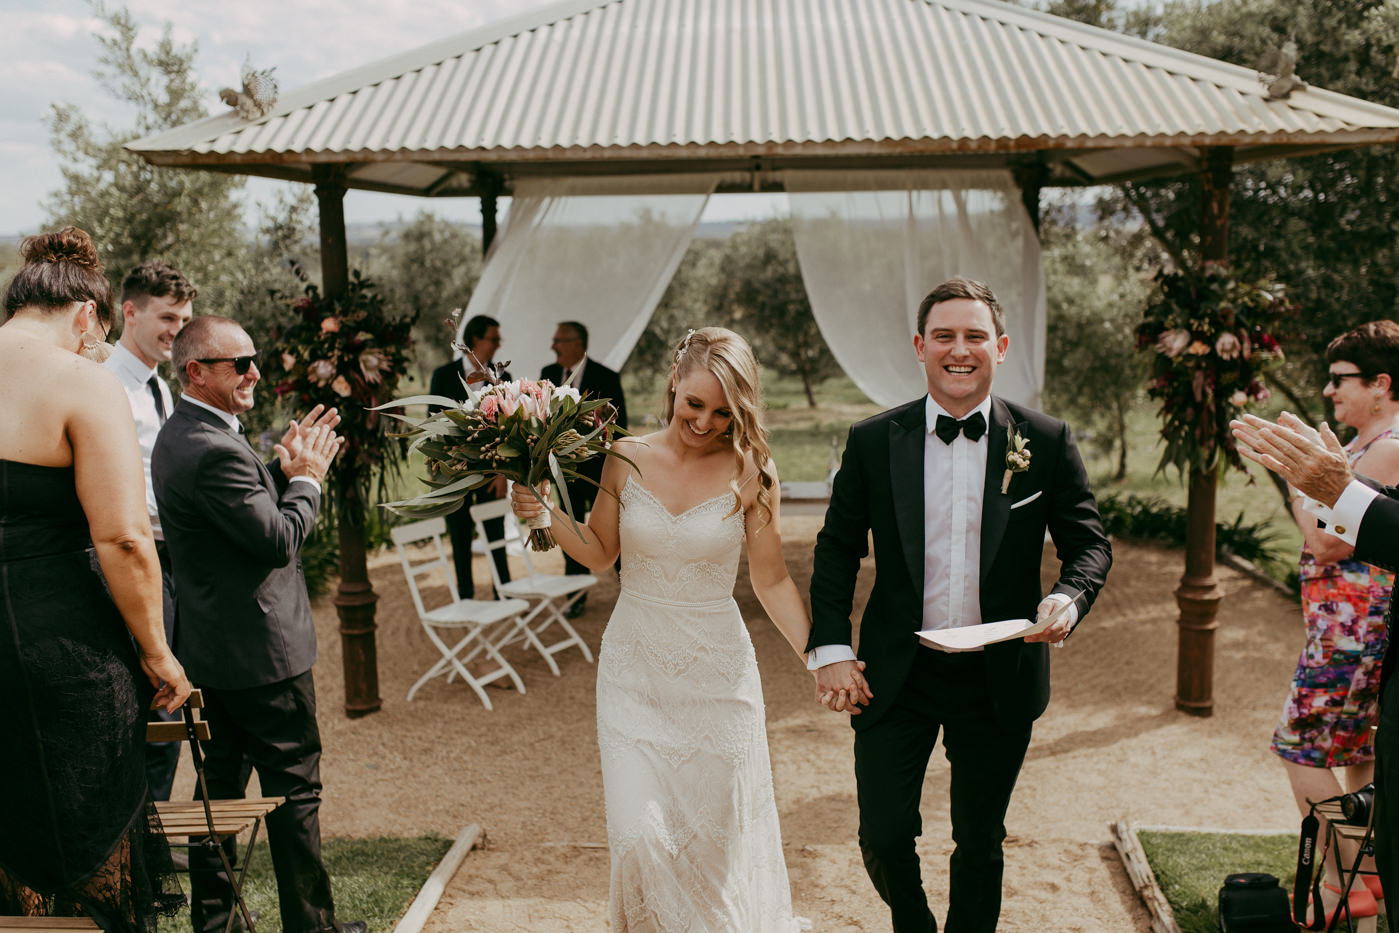 Anthony & Eliet - Wagga Wagga Wedding - Country NSW - Samantha Heather Photography-110.jpg